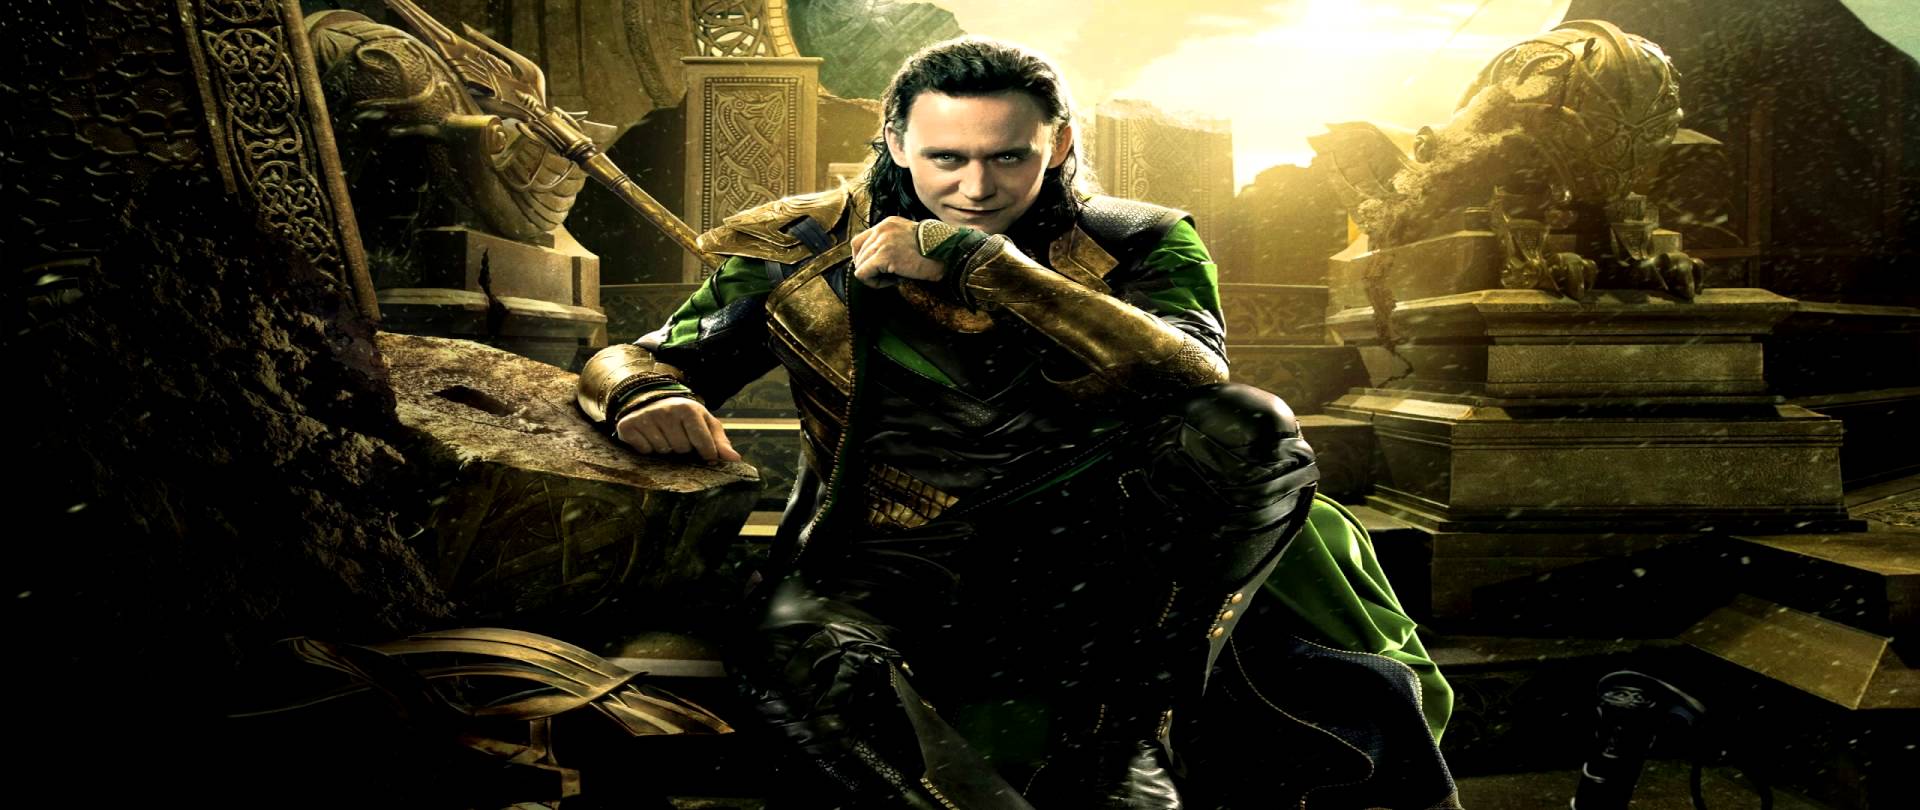 Thor: The Dark World Trial of Loki